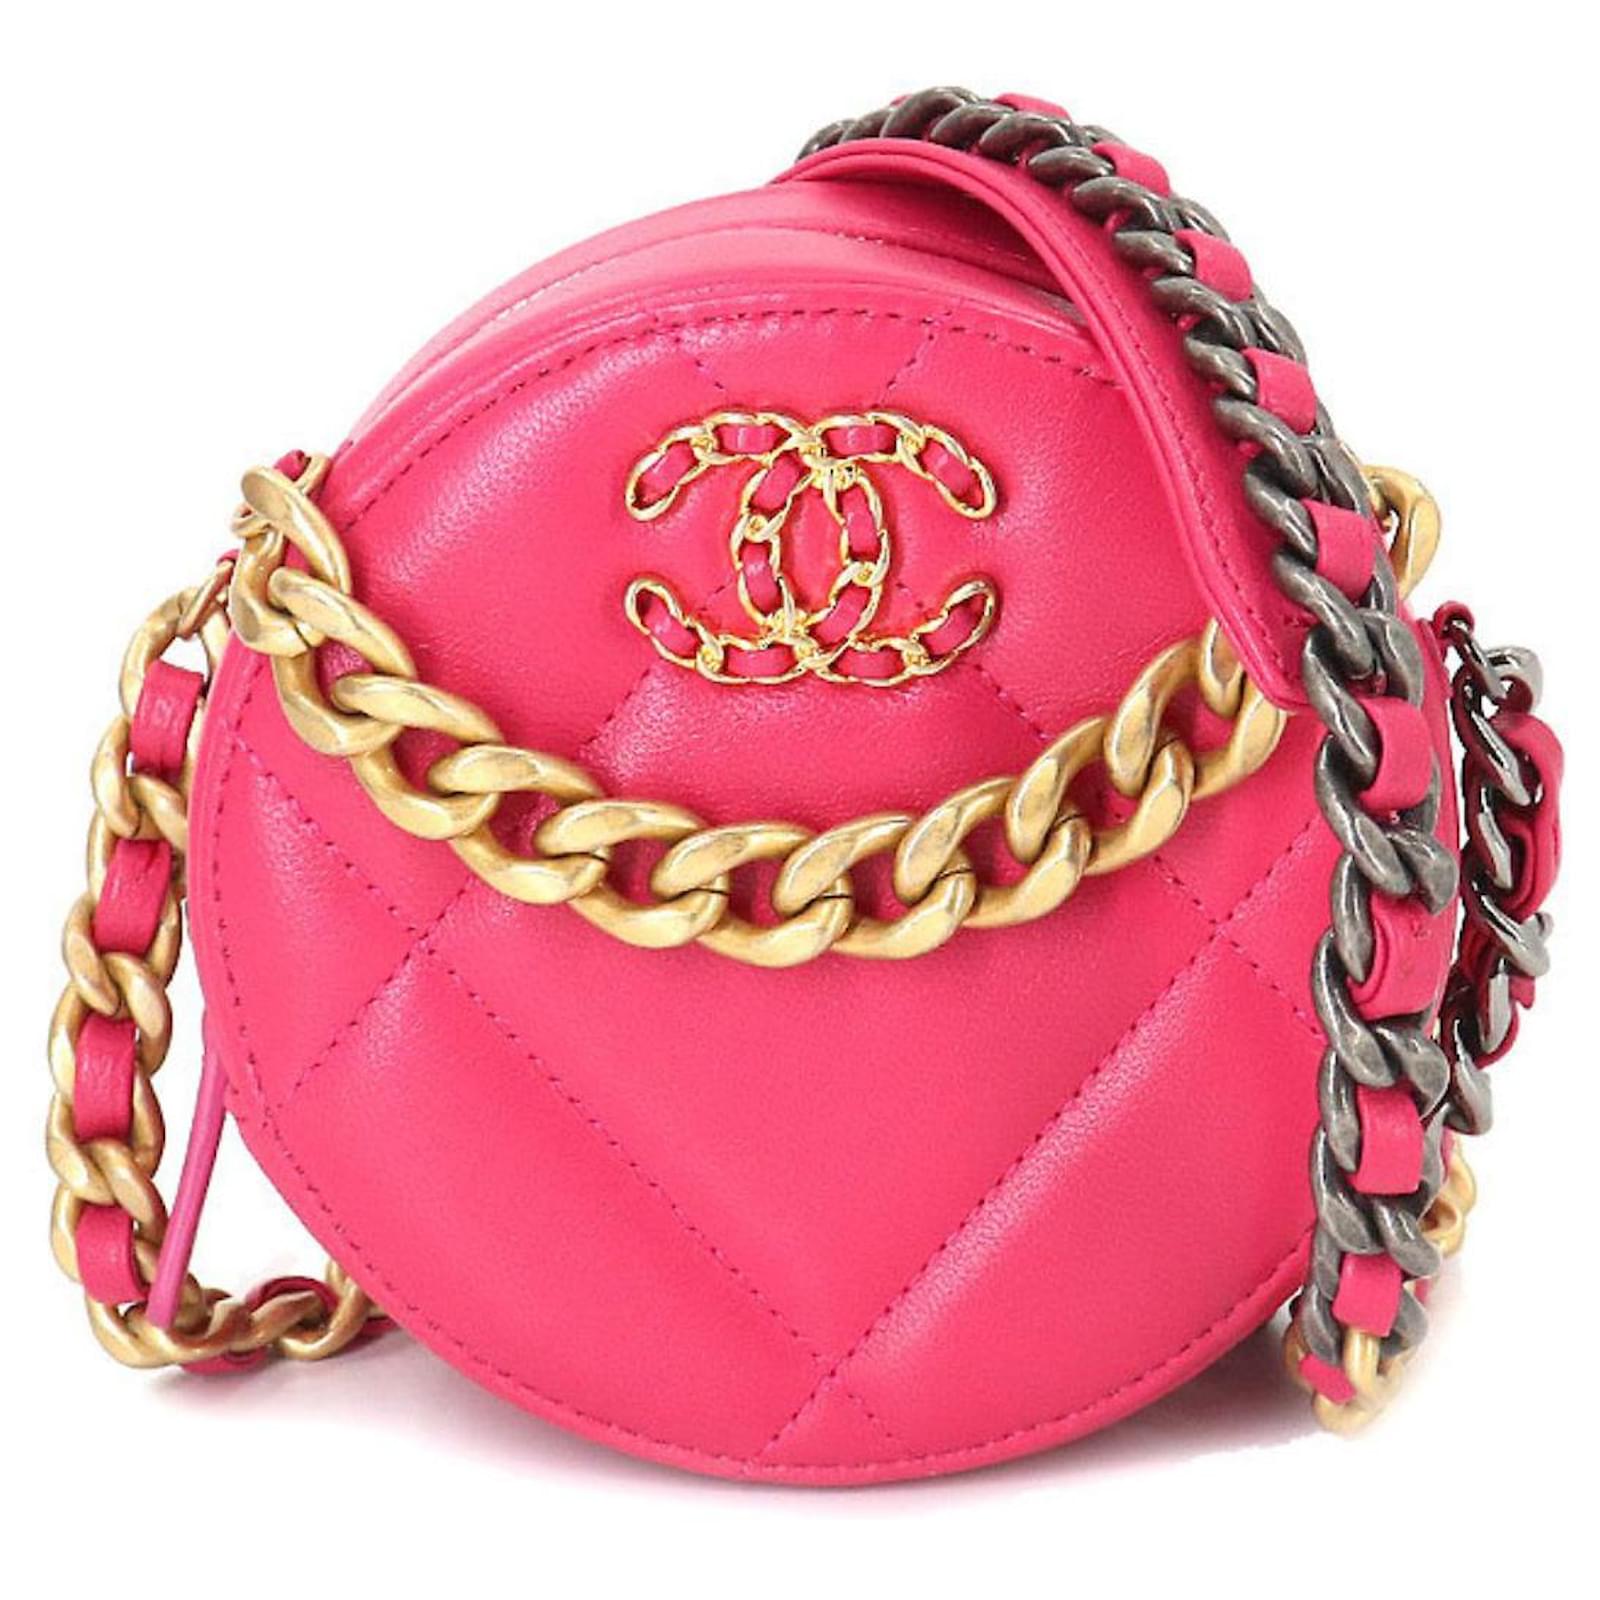 Handbags Chanel Chanel Bag .